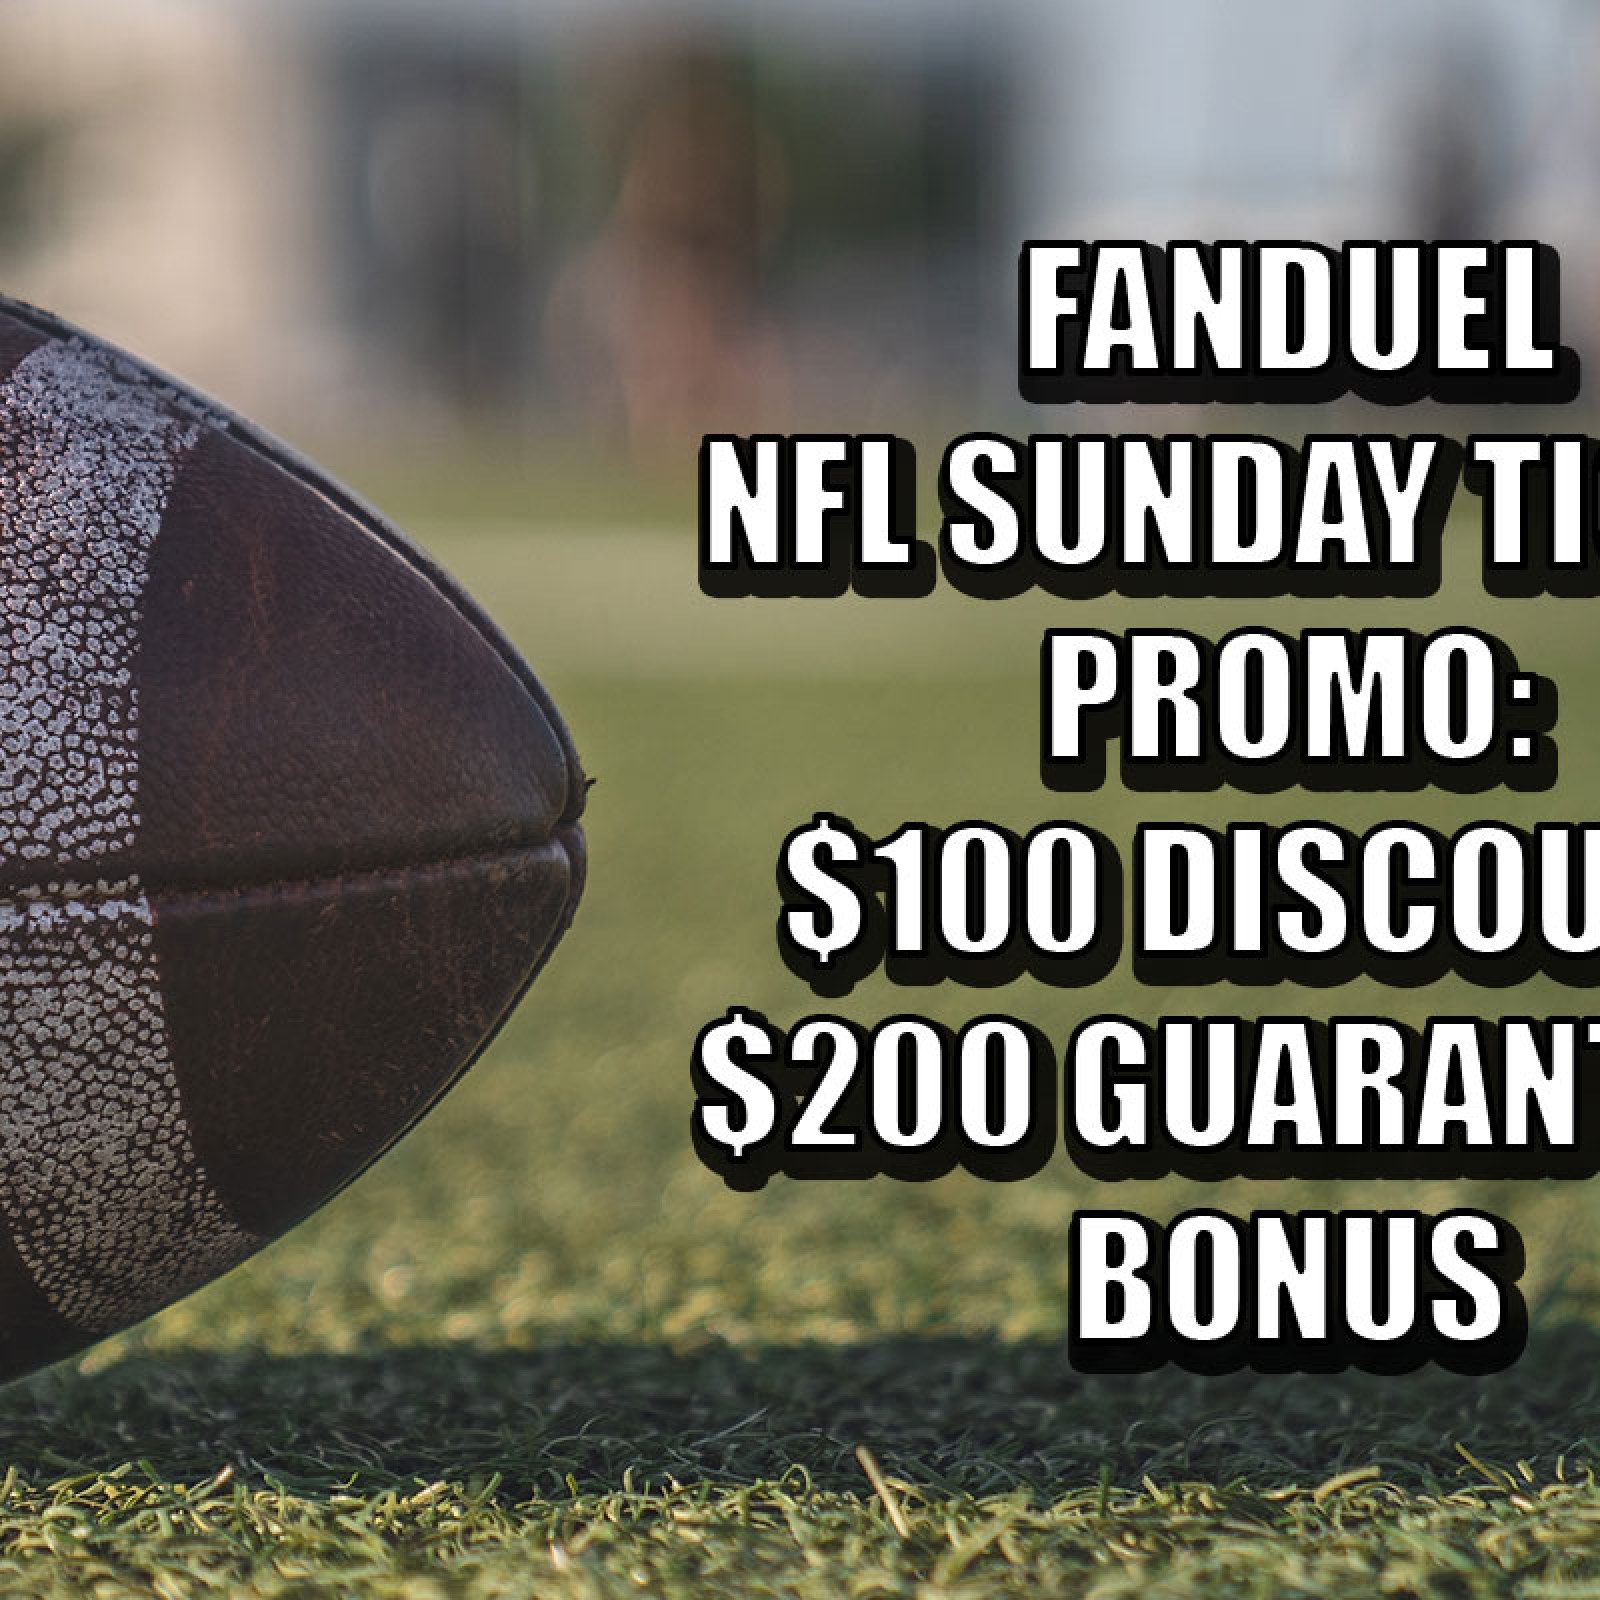 FanDuel NFL Sunday Ticket Promo Offers $100 Discount, $200